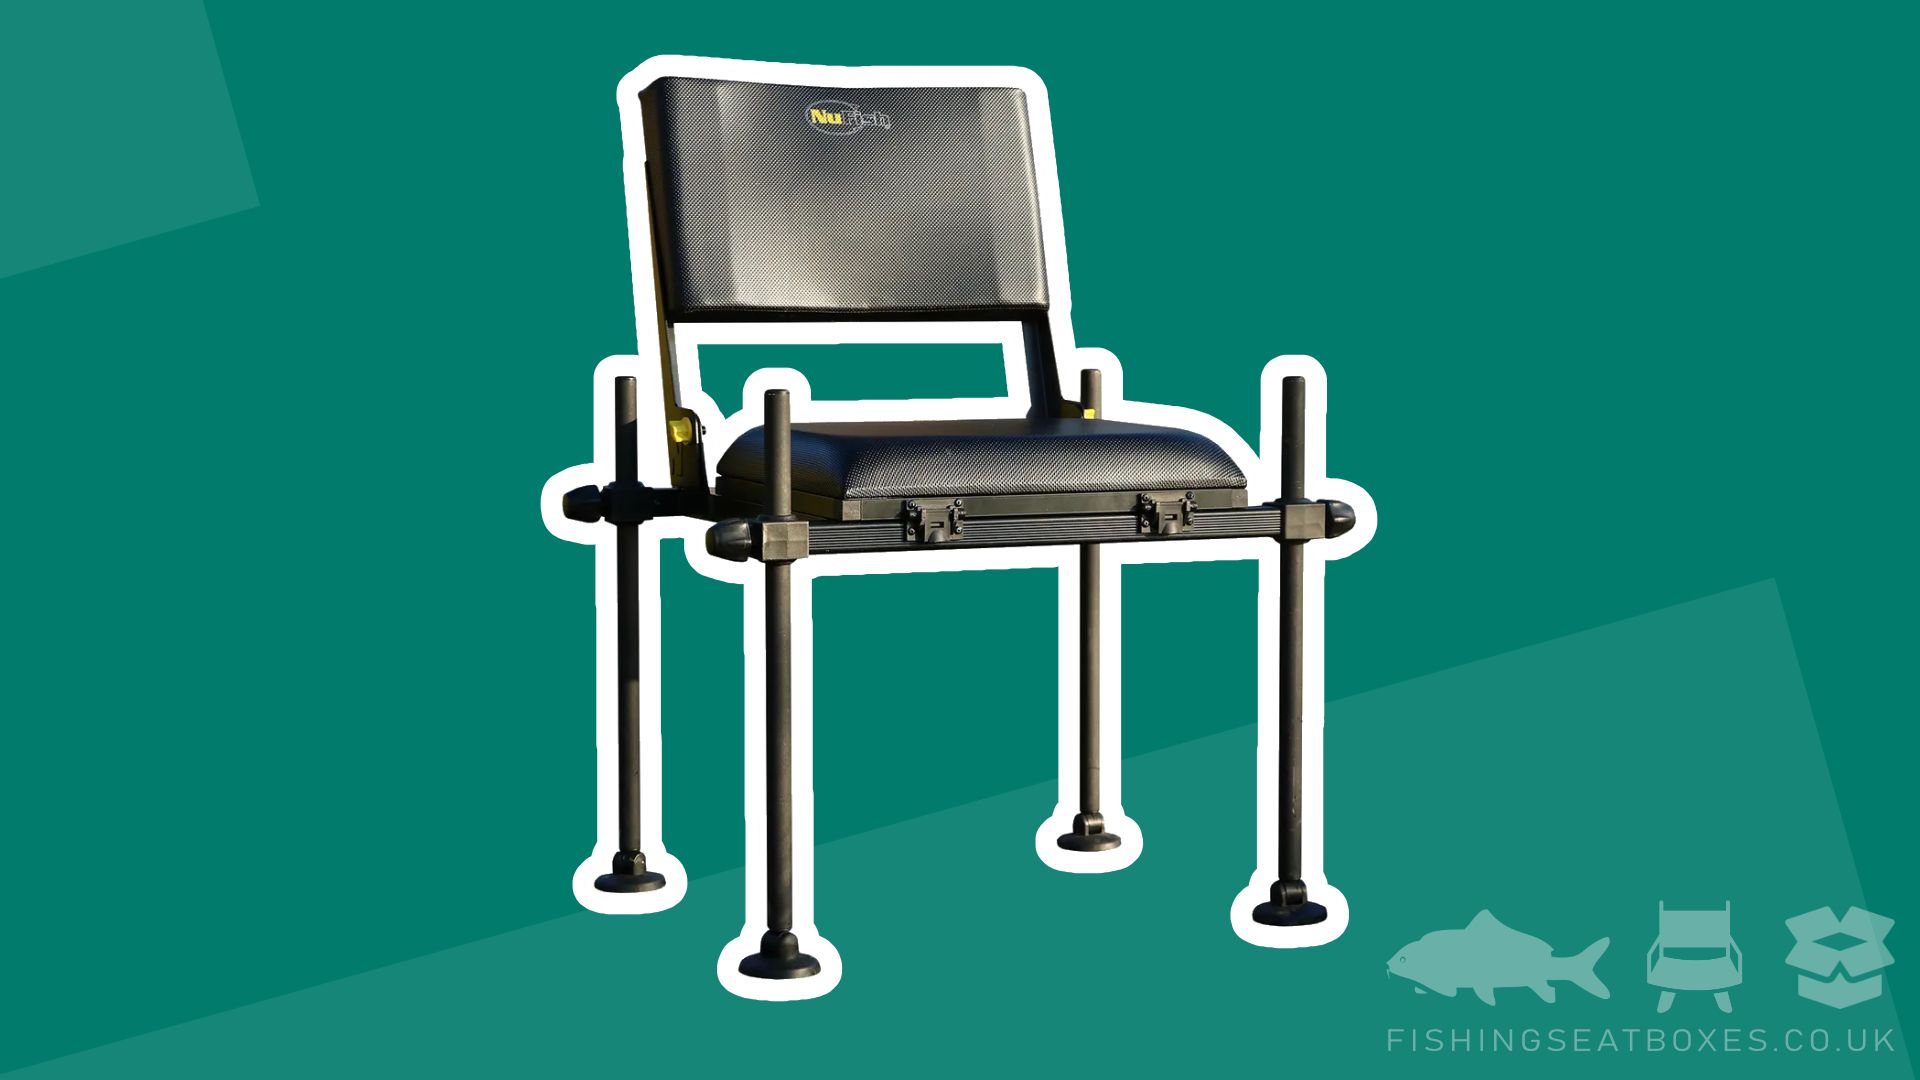 NuFish Restabox Review - Lightweight Hybrid Seat Chair Box